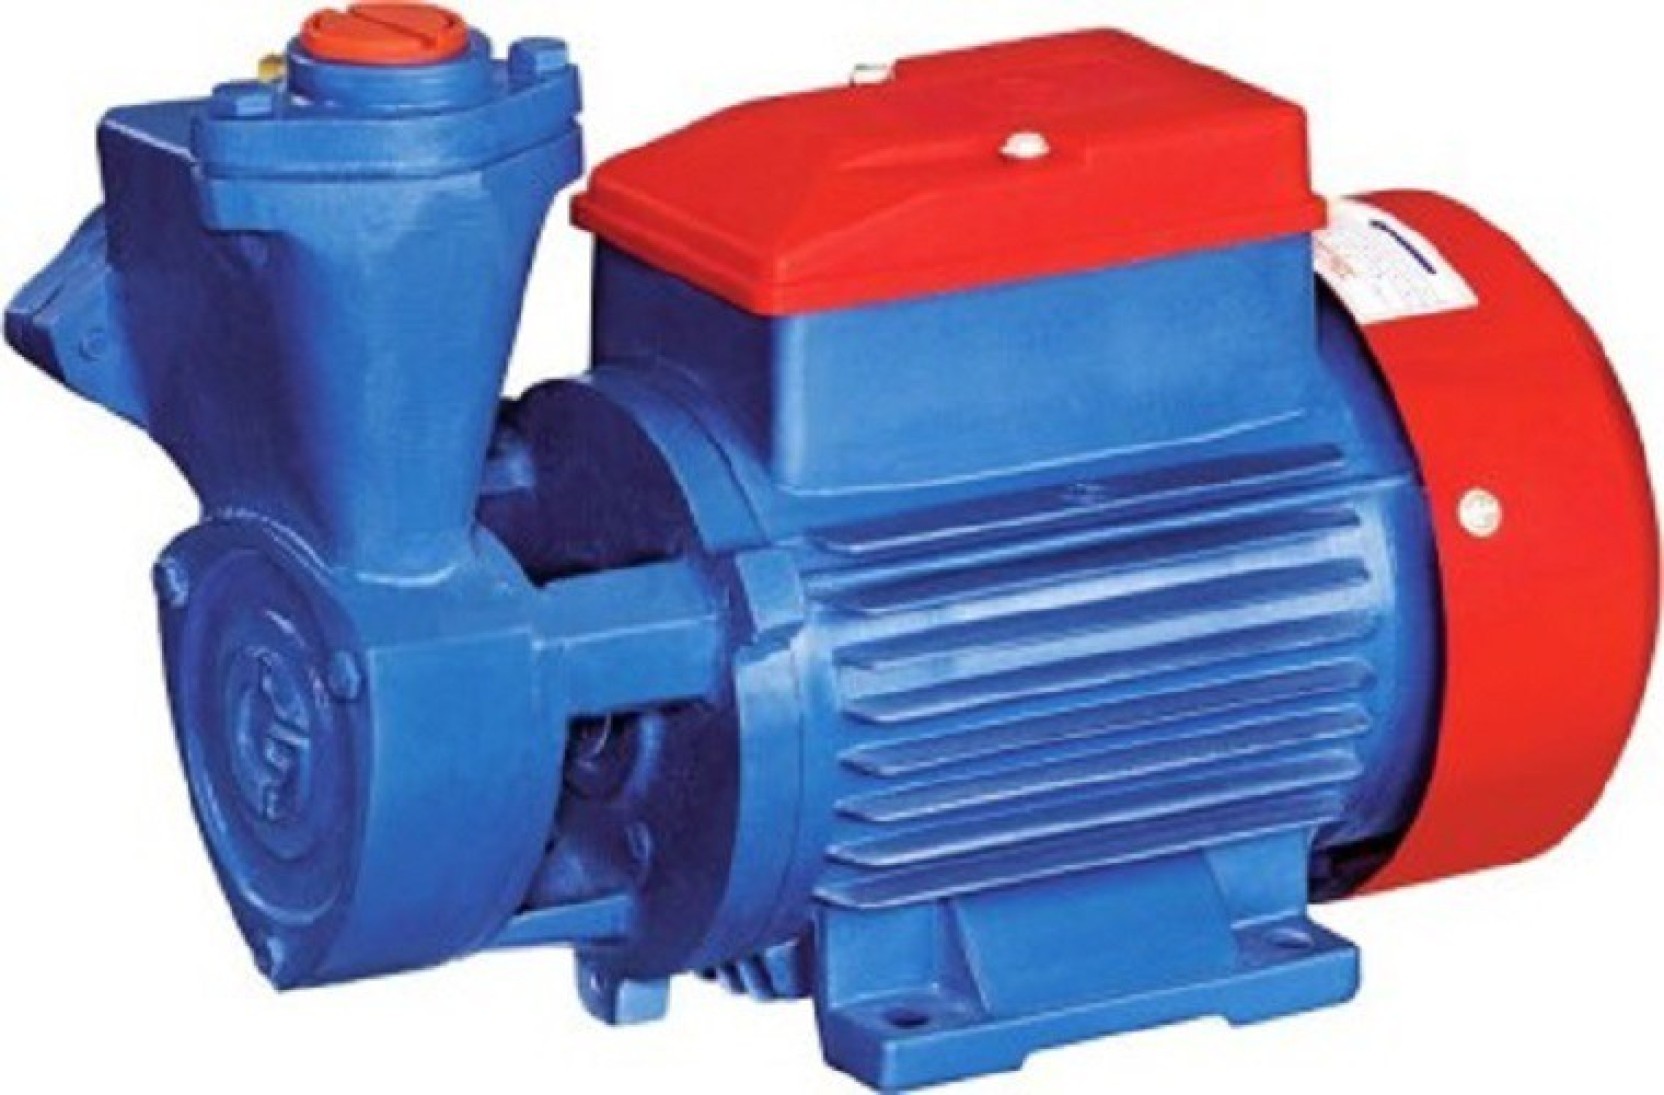 Crompton Greaves Mini Master 1 Centrifugal Water Pump